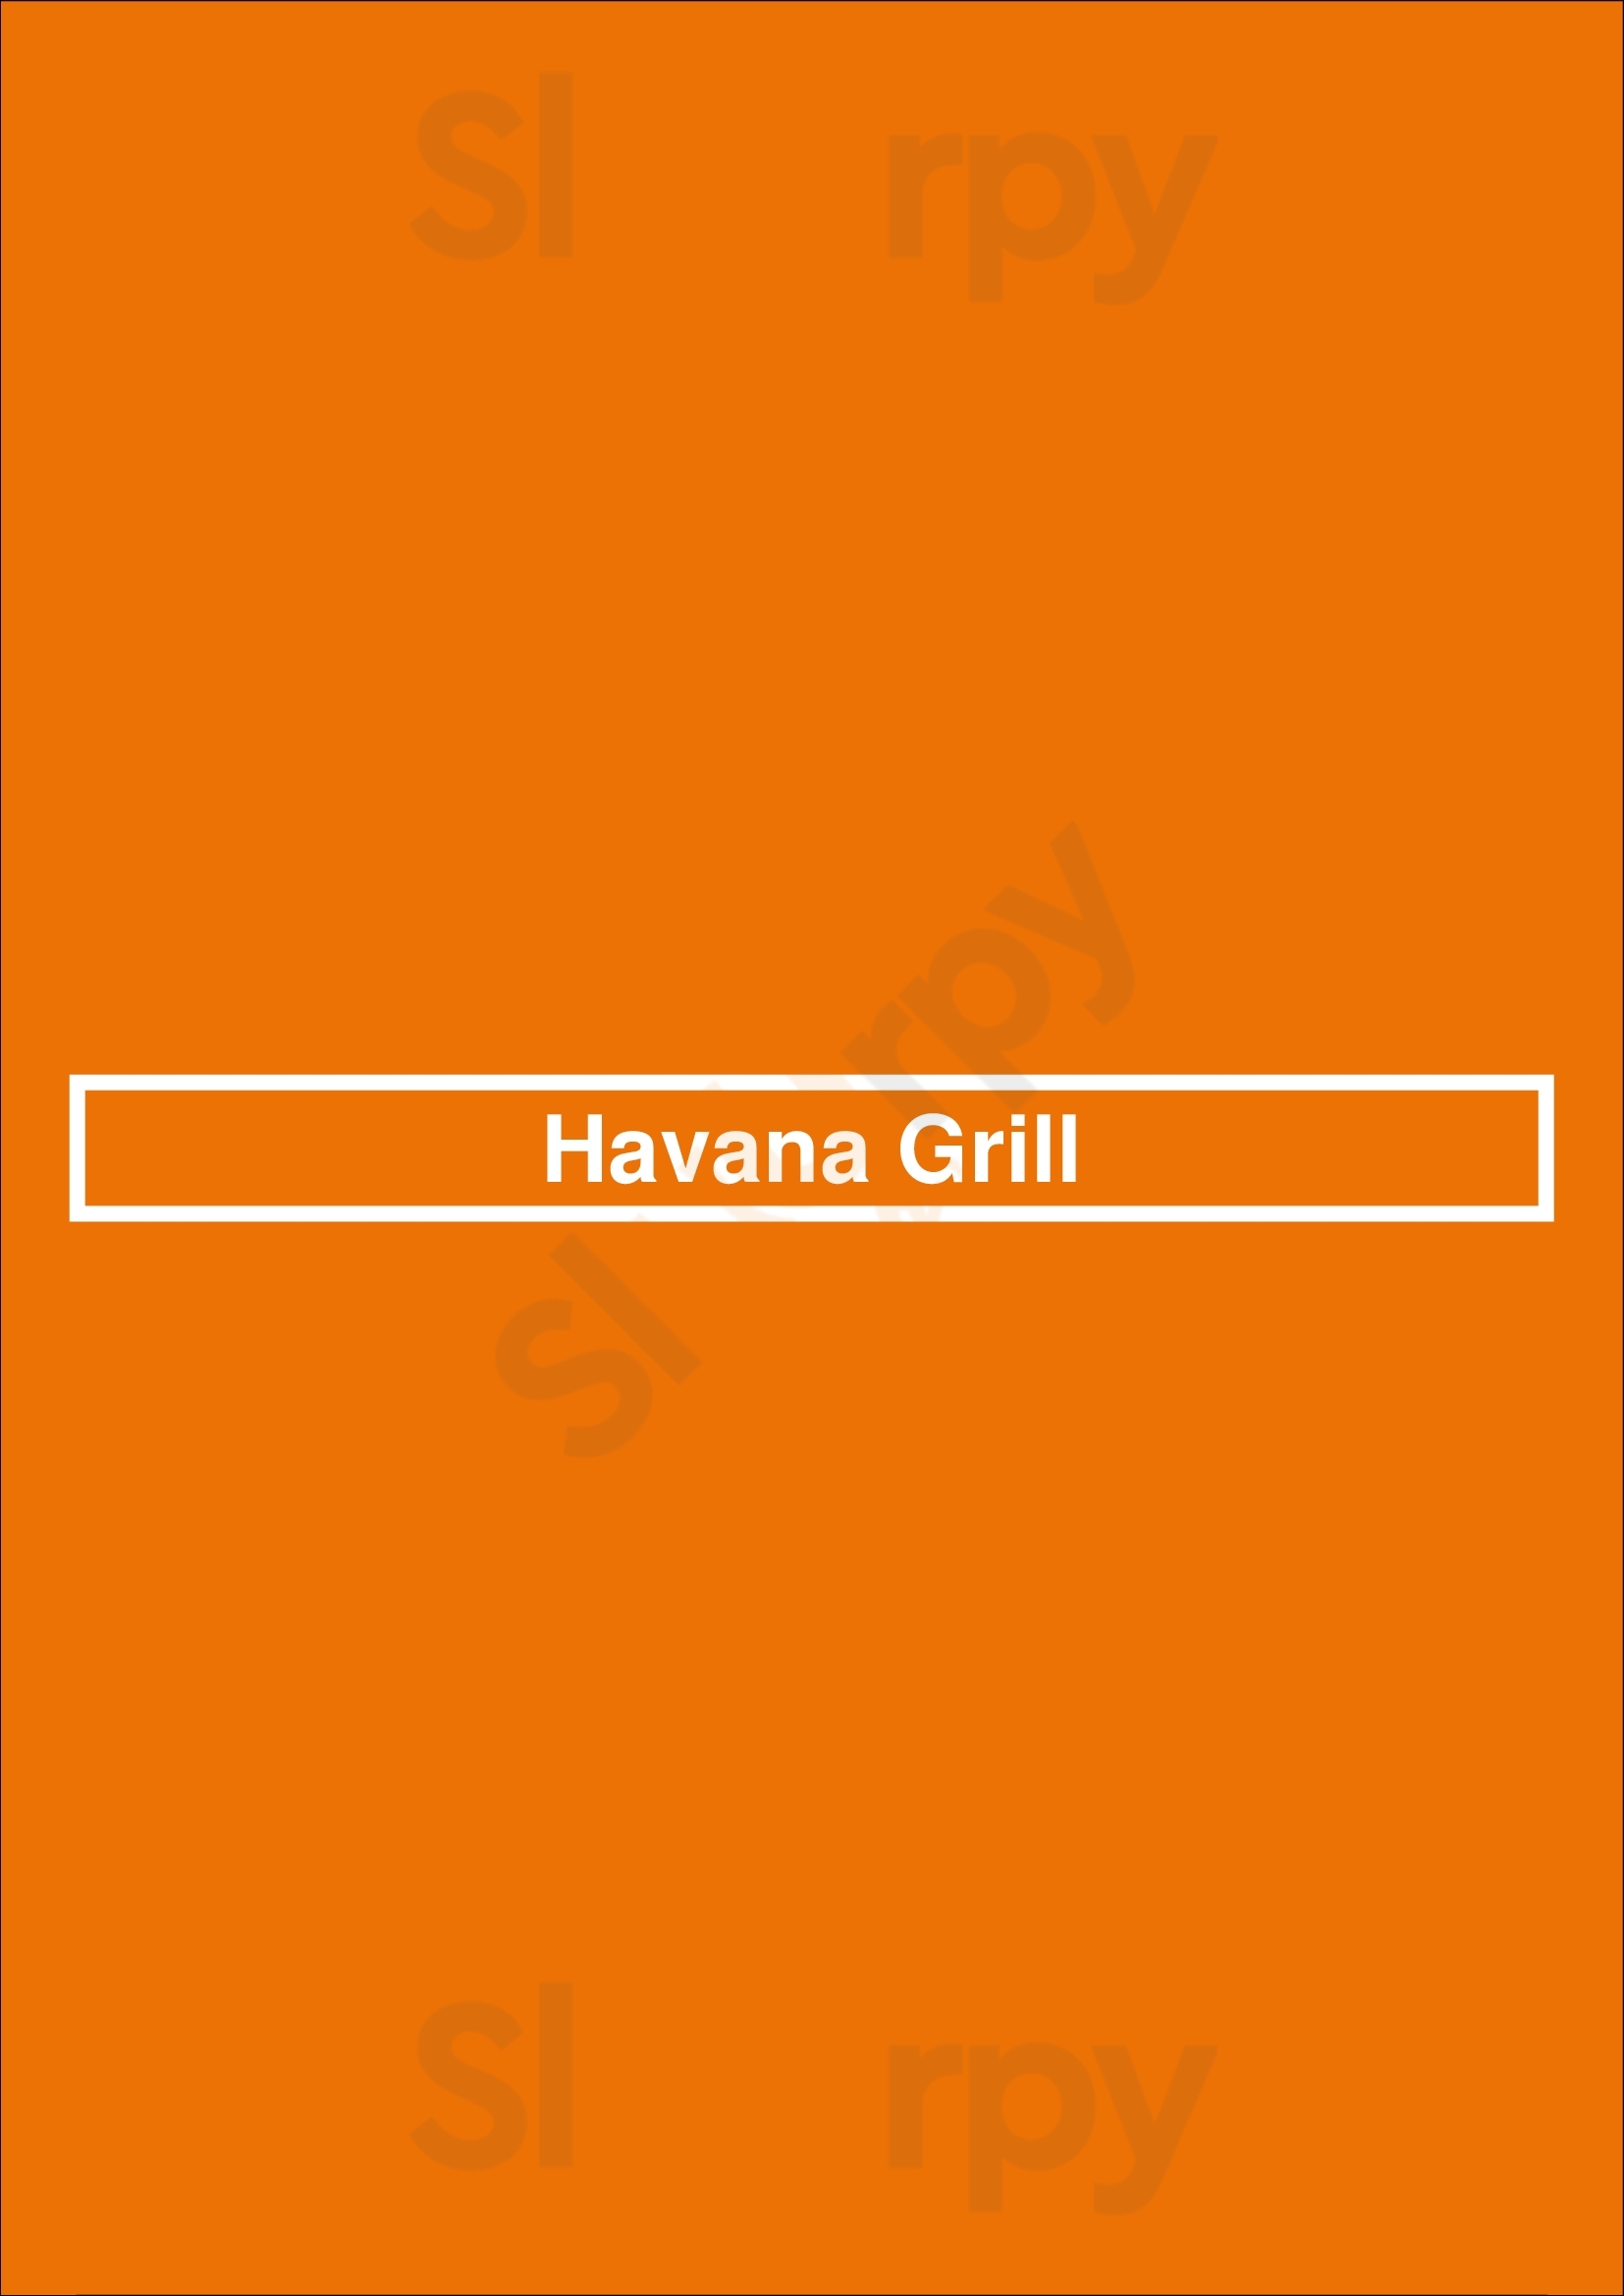 Havana Grill San Diego Menu - 1